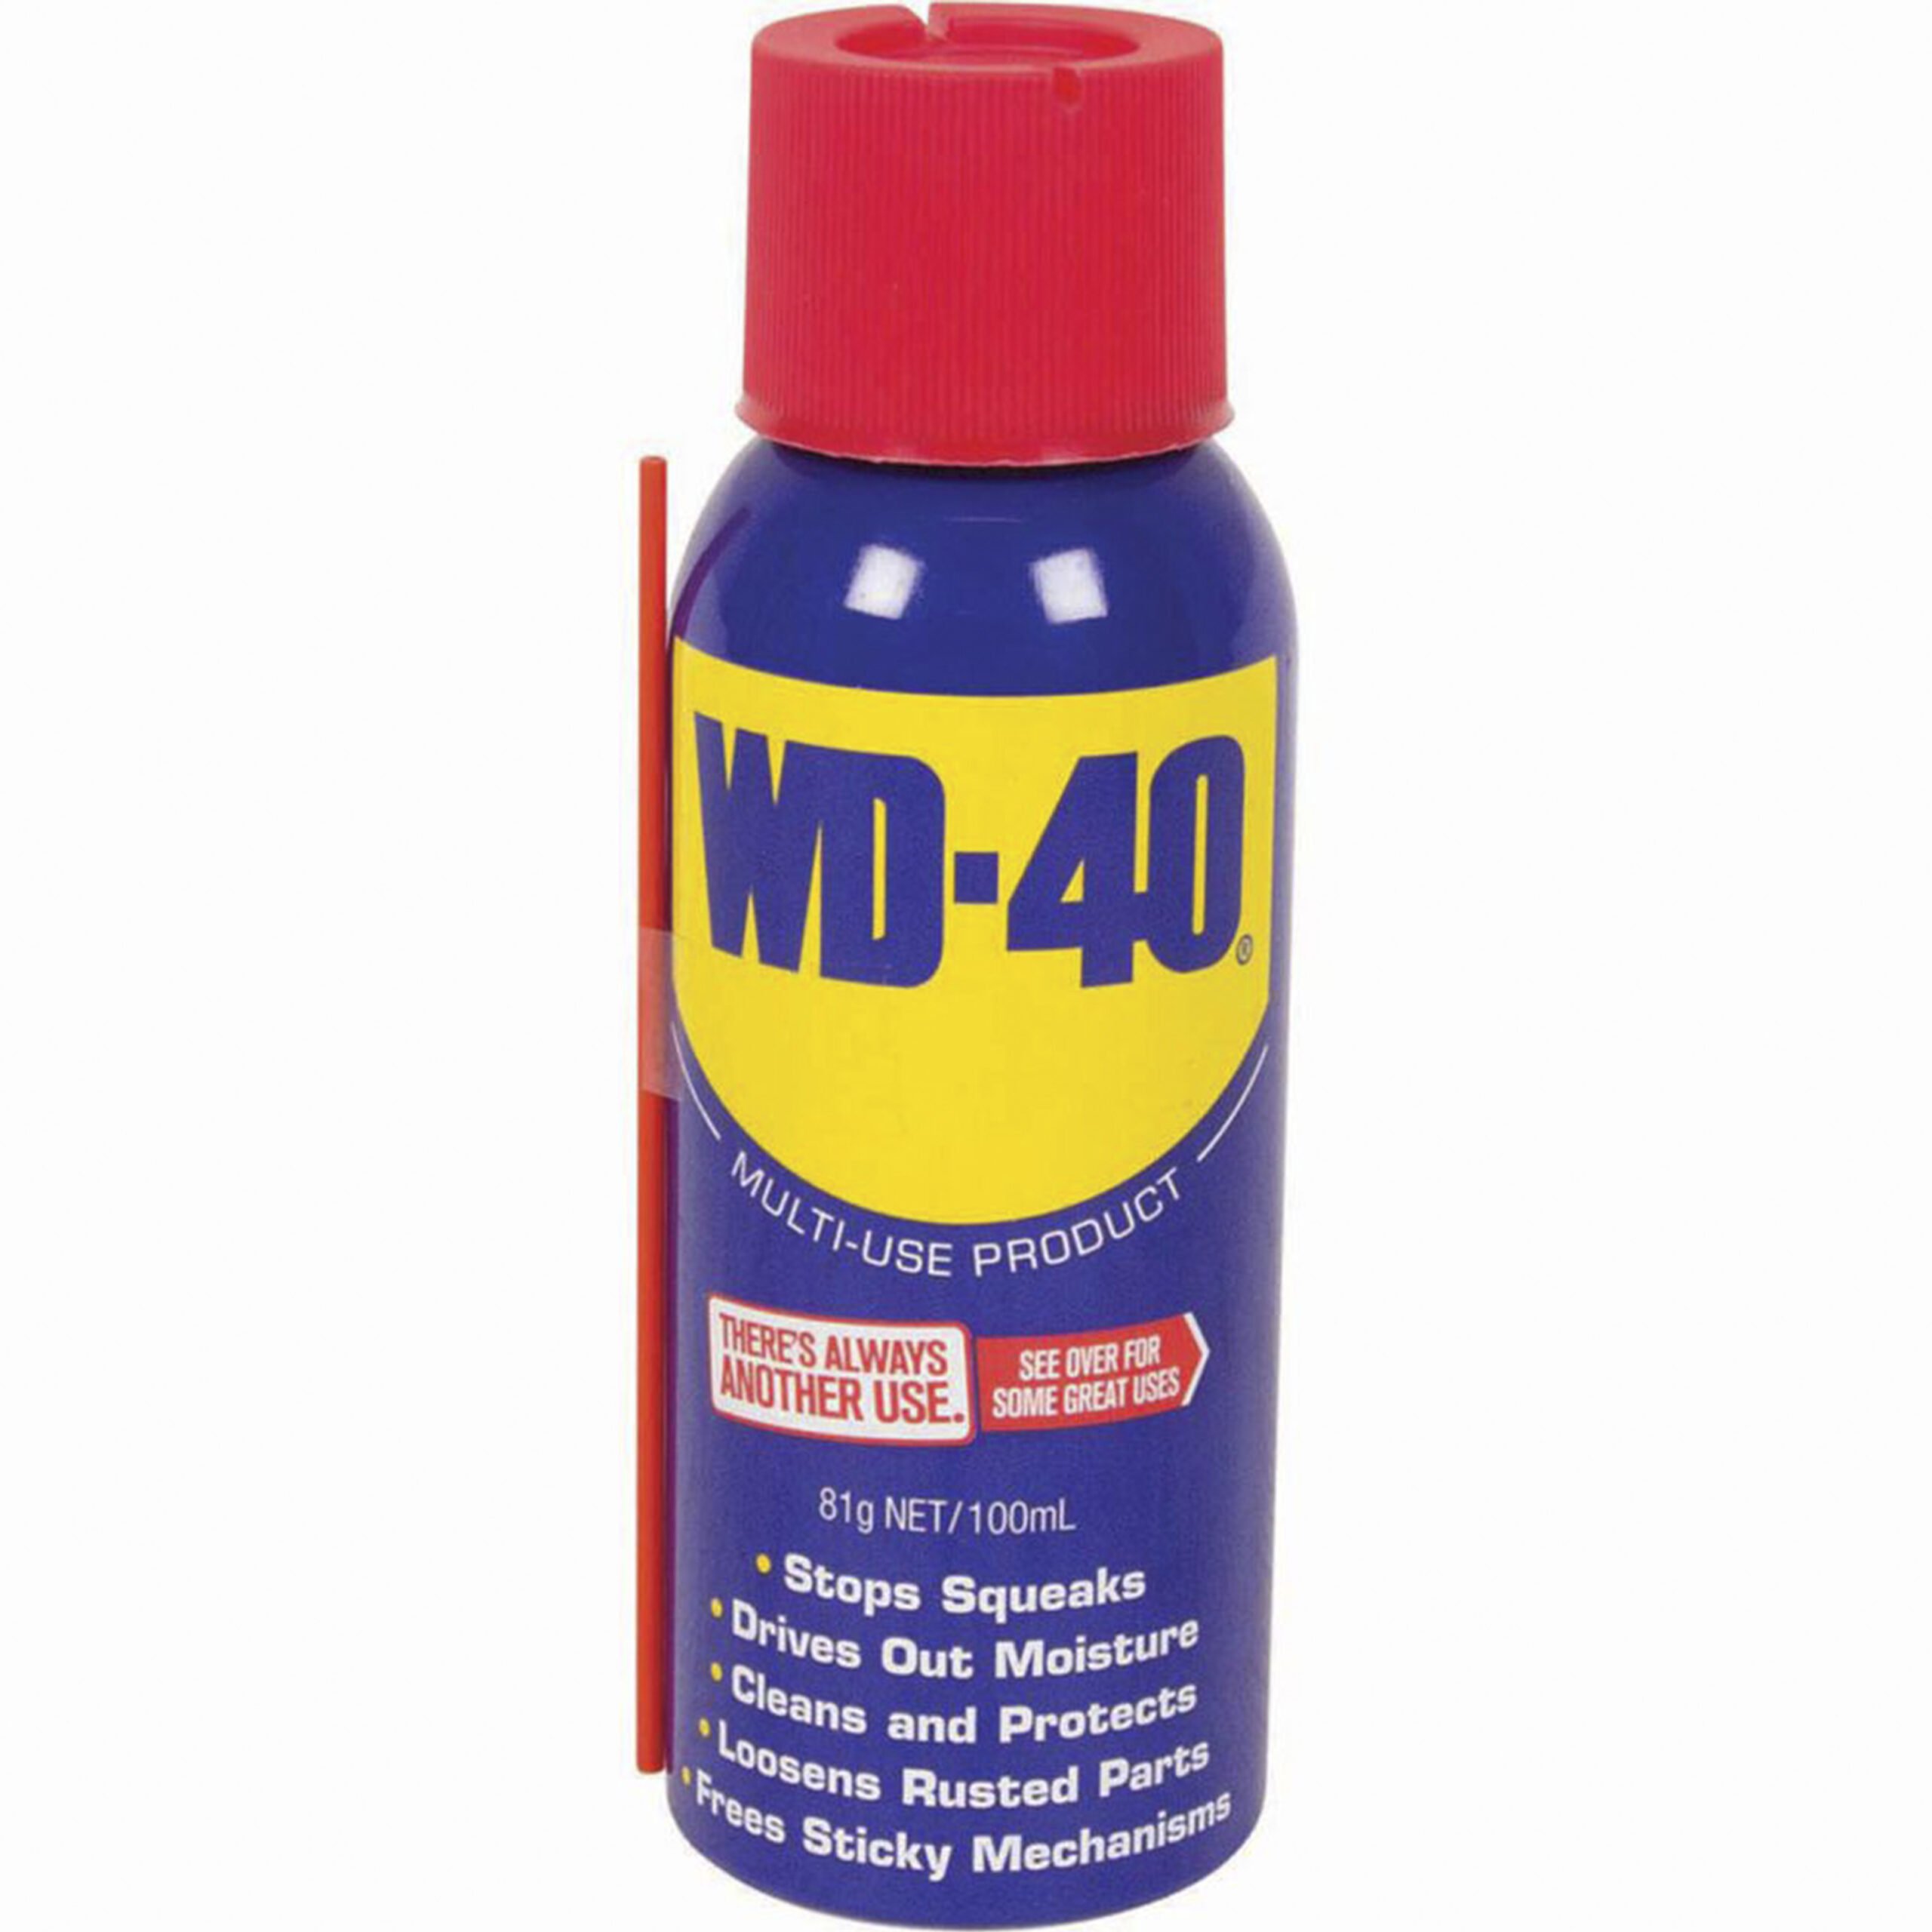 Wd-40 multi purpose aerosol lubricant 81g - Wholesalegaragedoors